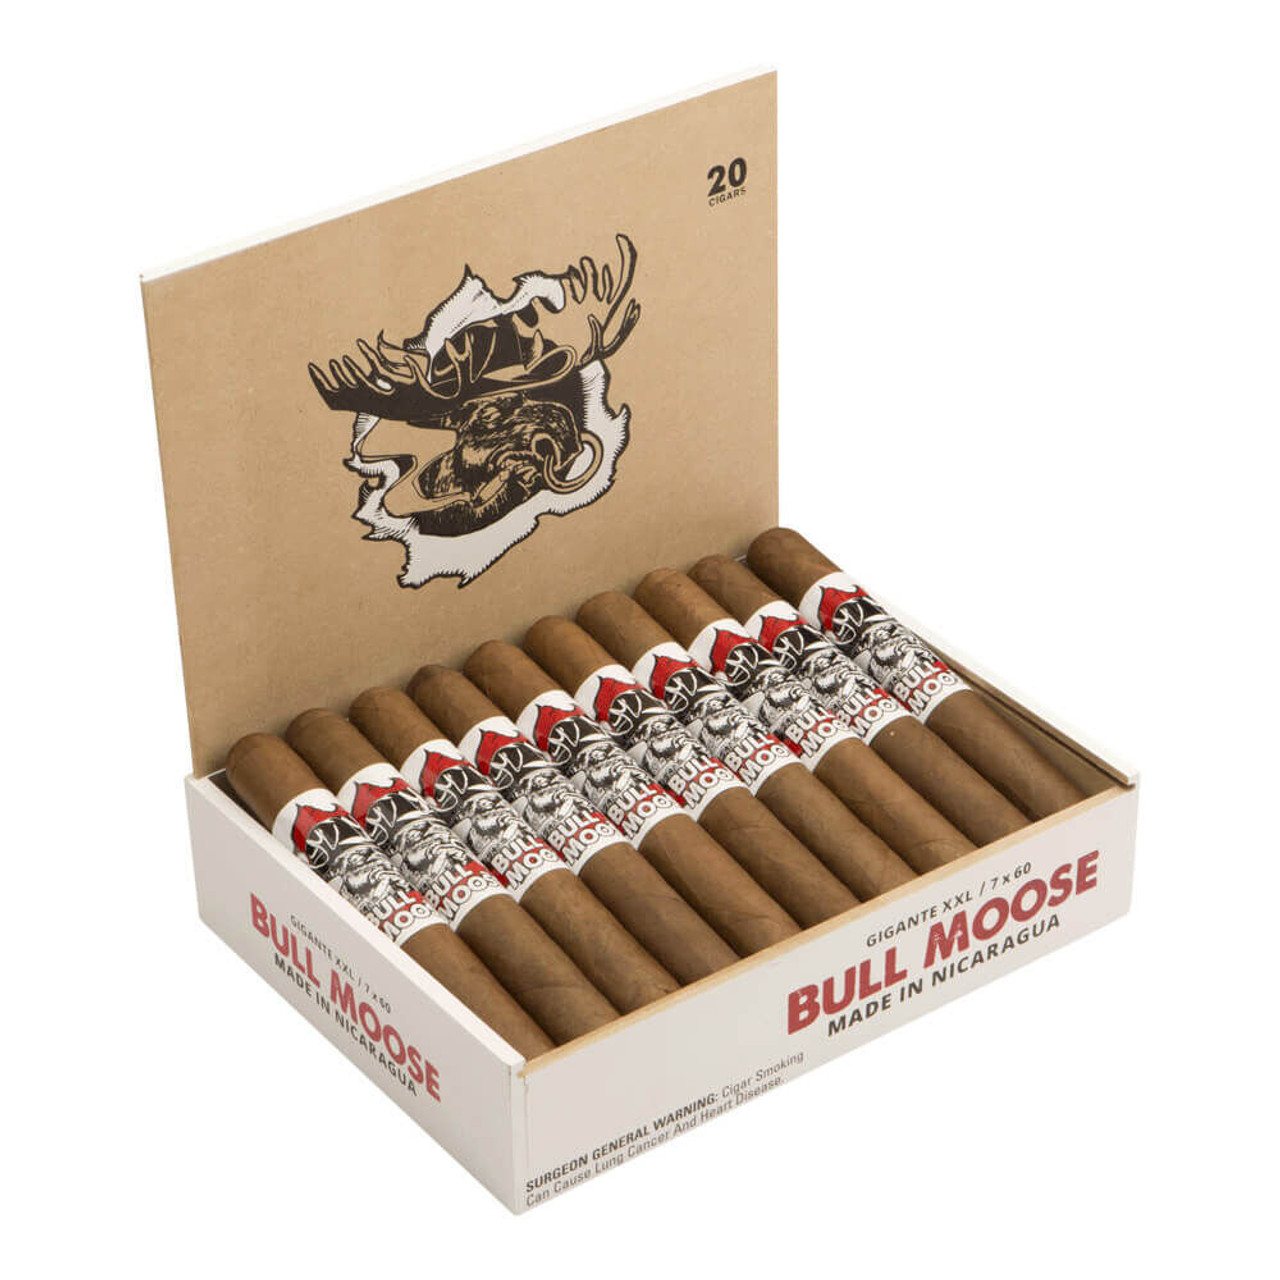 Chillin' Moose Bull Moose Gigante XXL Cigars - 7 x 60 (Box of 20) Open